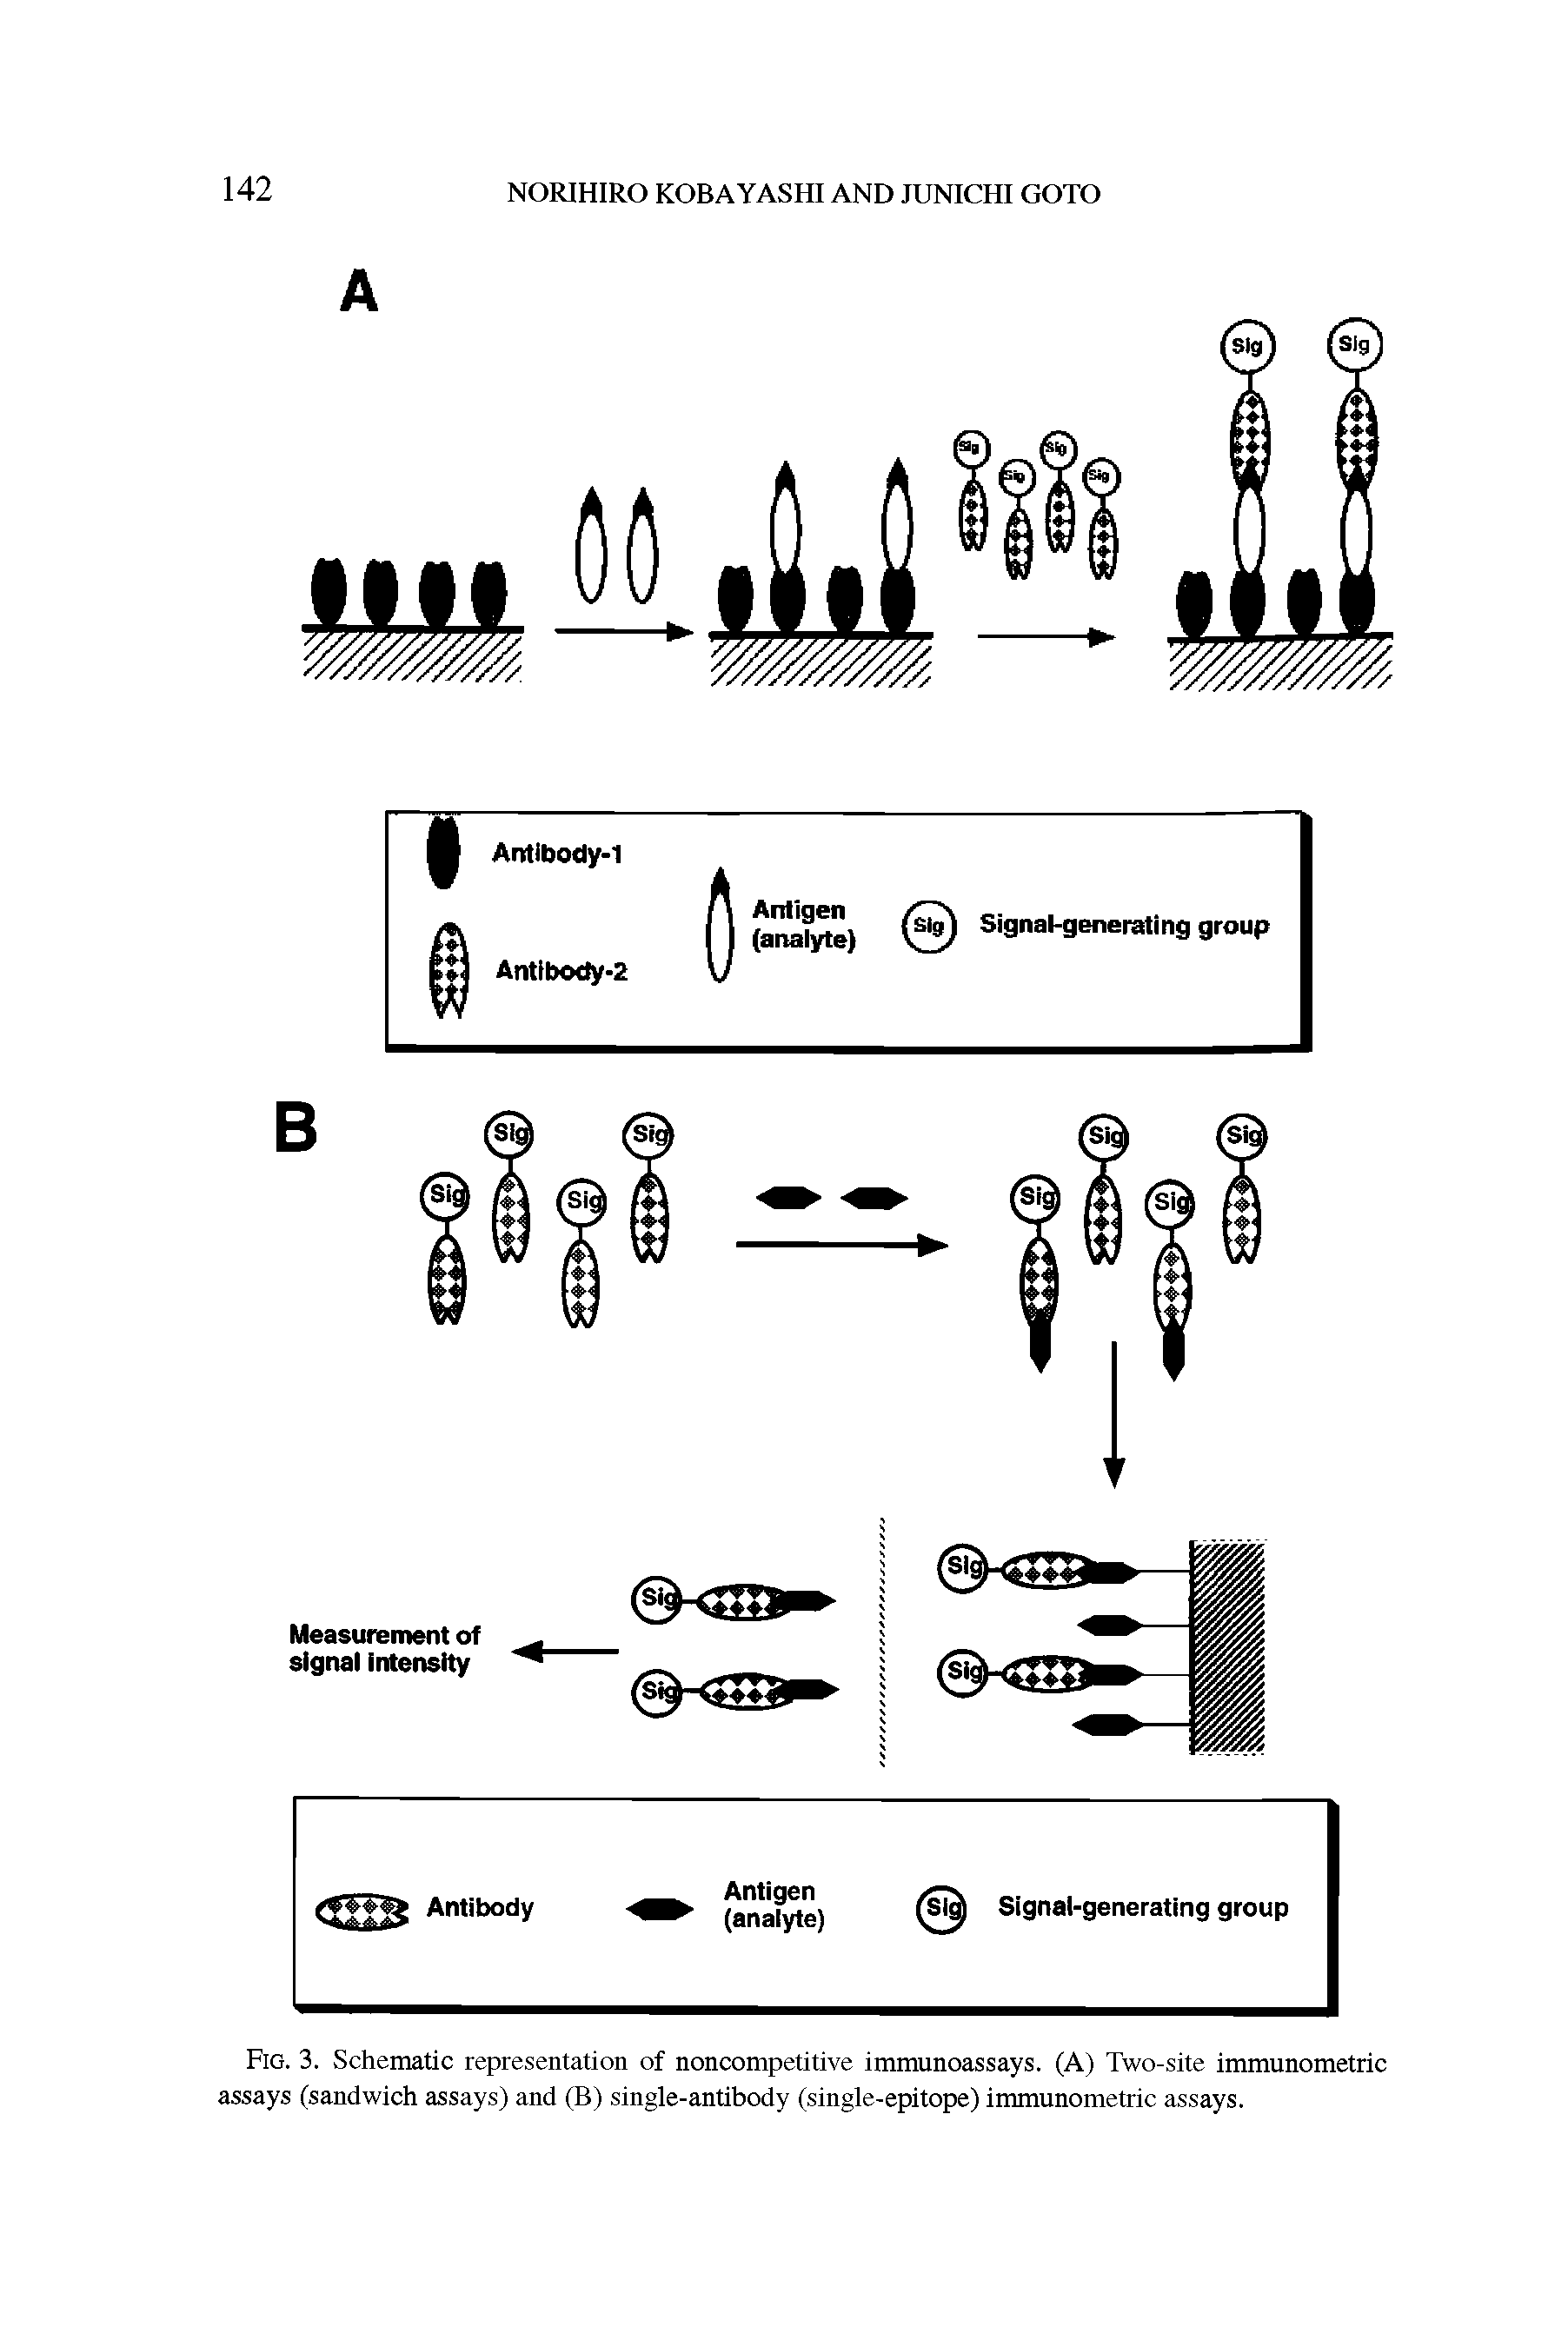 Fig. 3. Schematic representation of noncompetitive immunoassays. (A) Two-site immunometric assays (sandwich assays) and (B) single-antibody (single-epitope) immunometric assays.